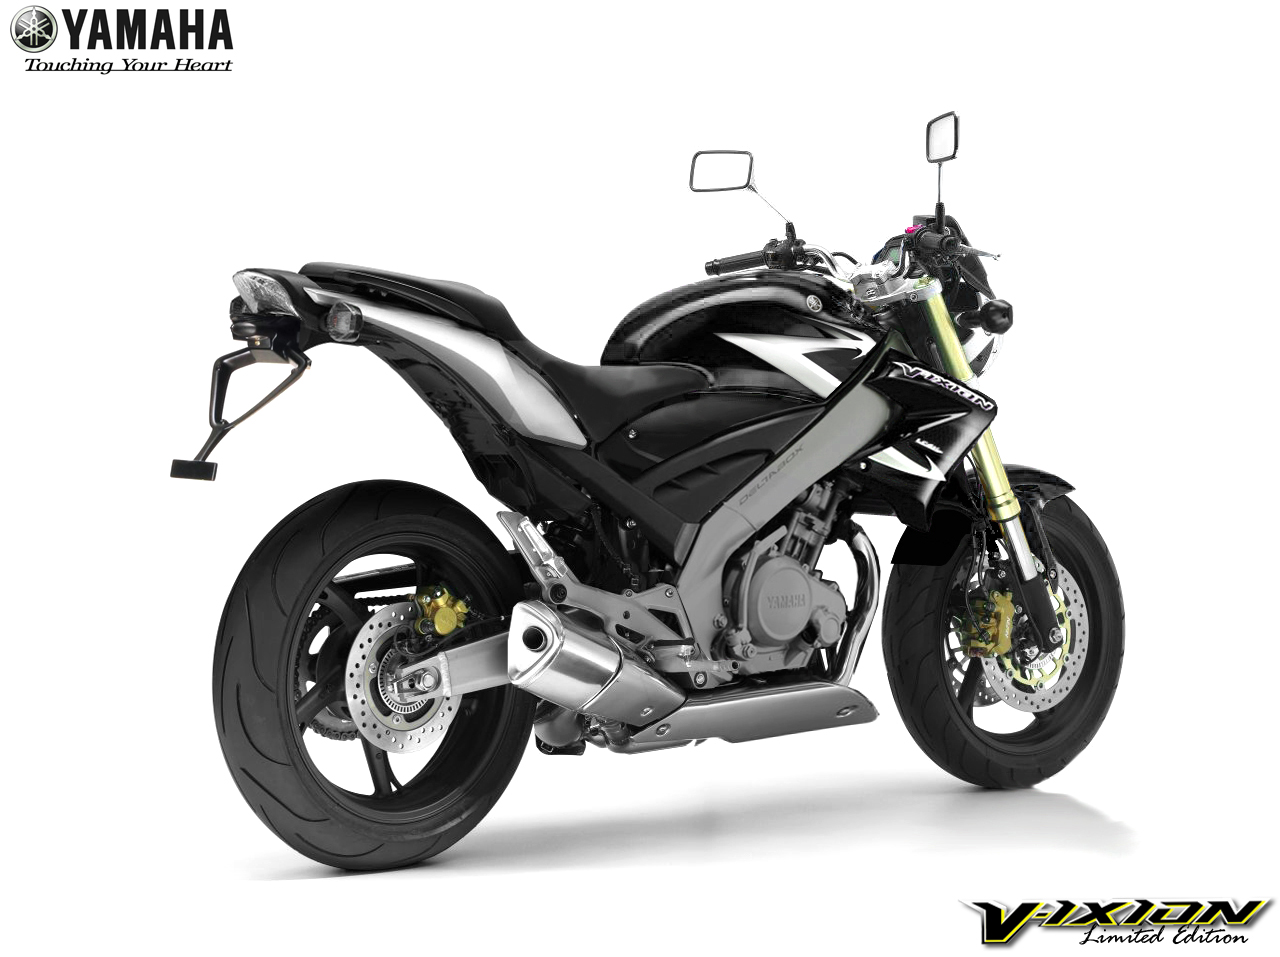 Harga Yamaha New V Ixion Kredit Kontan DAFTAR HARGA SEPEDA MOTOR